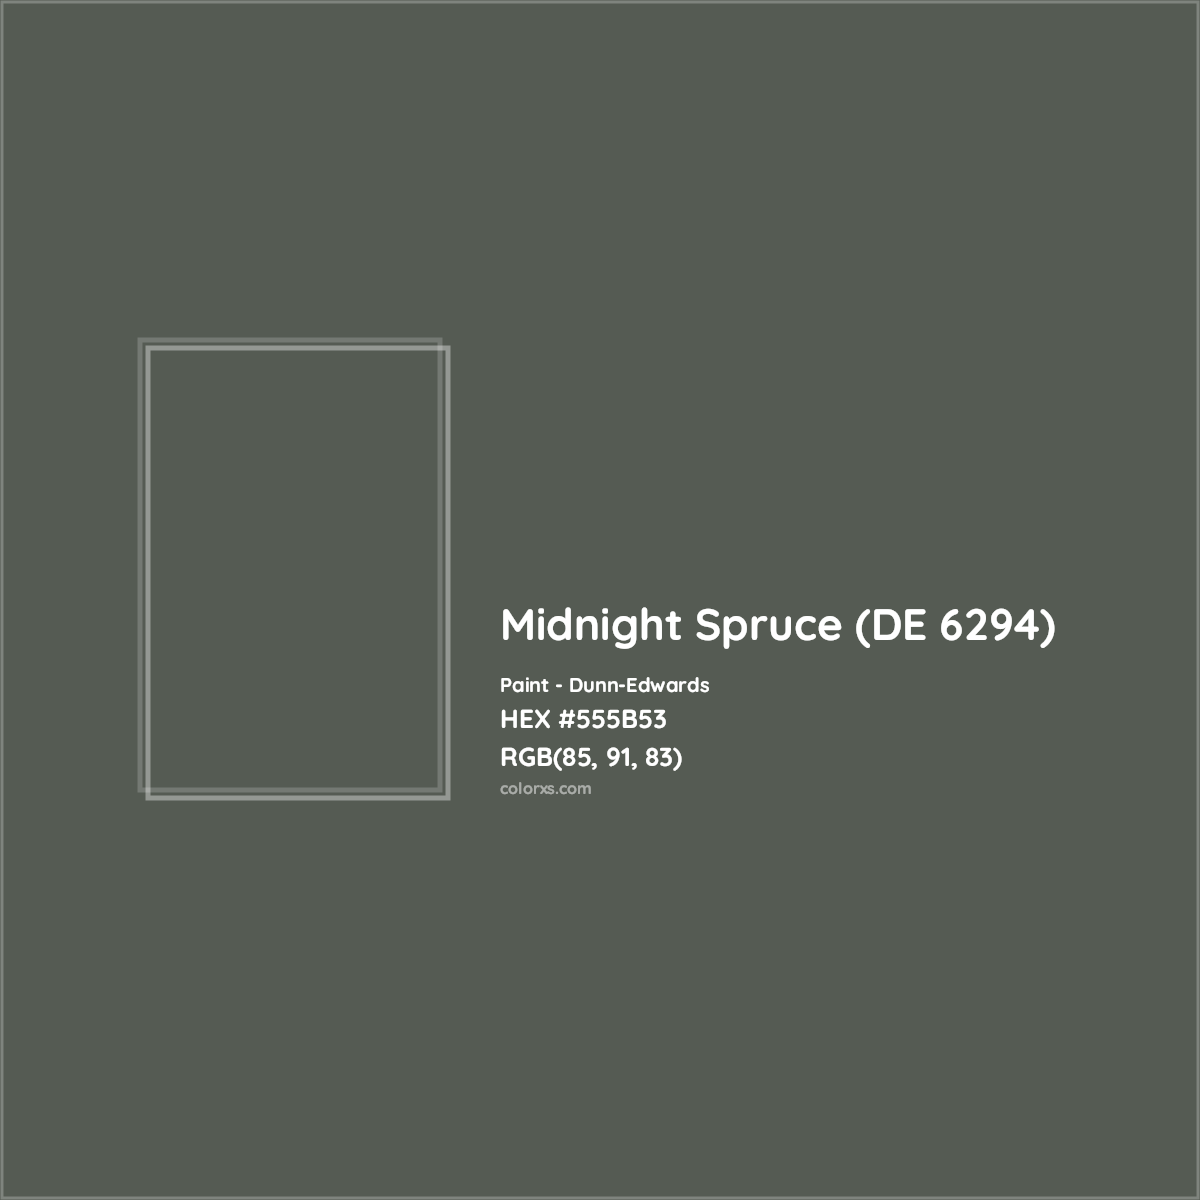 HEX #555B53 Midnight Spruce (DE 6294) Paint Dunn-Edwards - Color Code